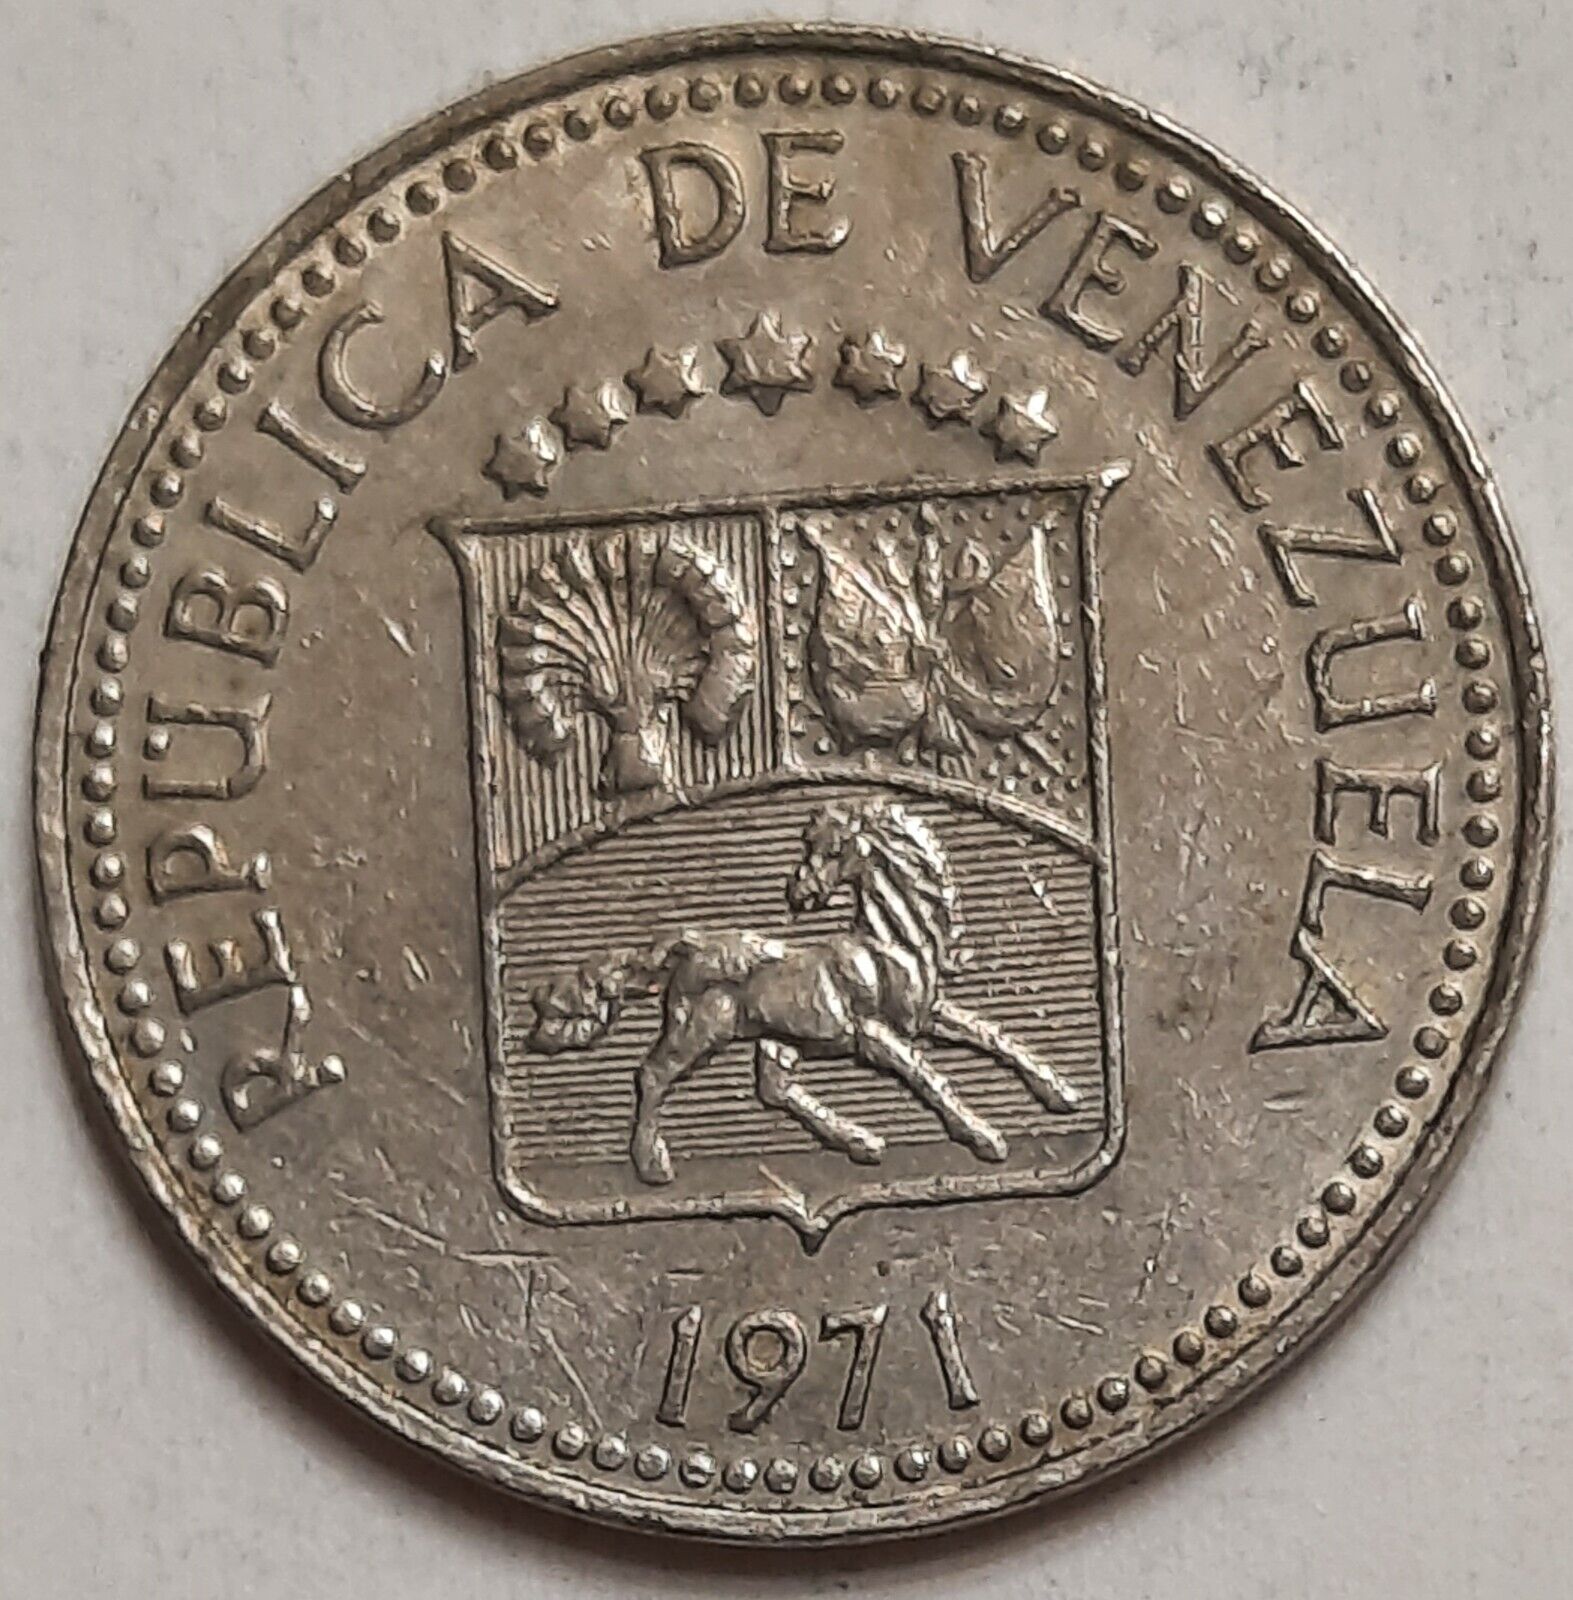 ONE CENT COINS: 1971 Republic Of / Republica De VENEZUELA 10 Centimos Coin